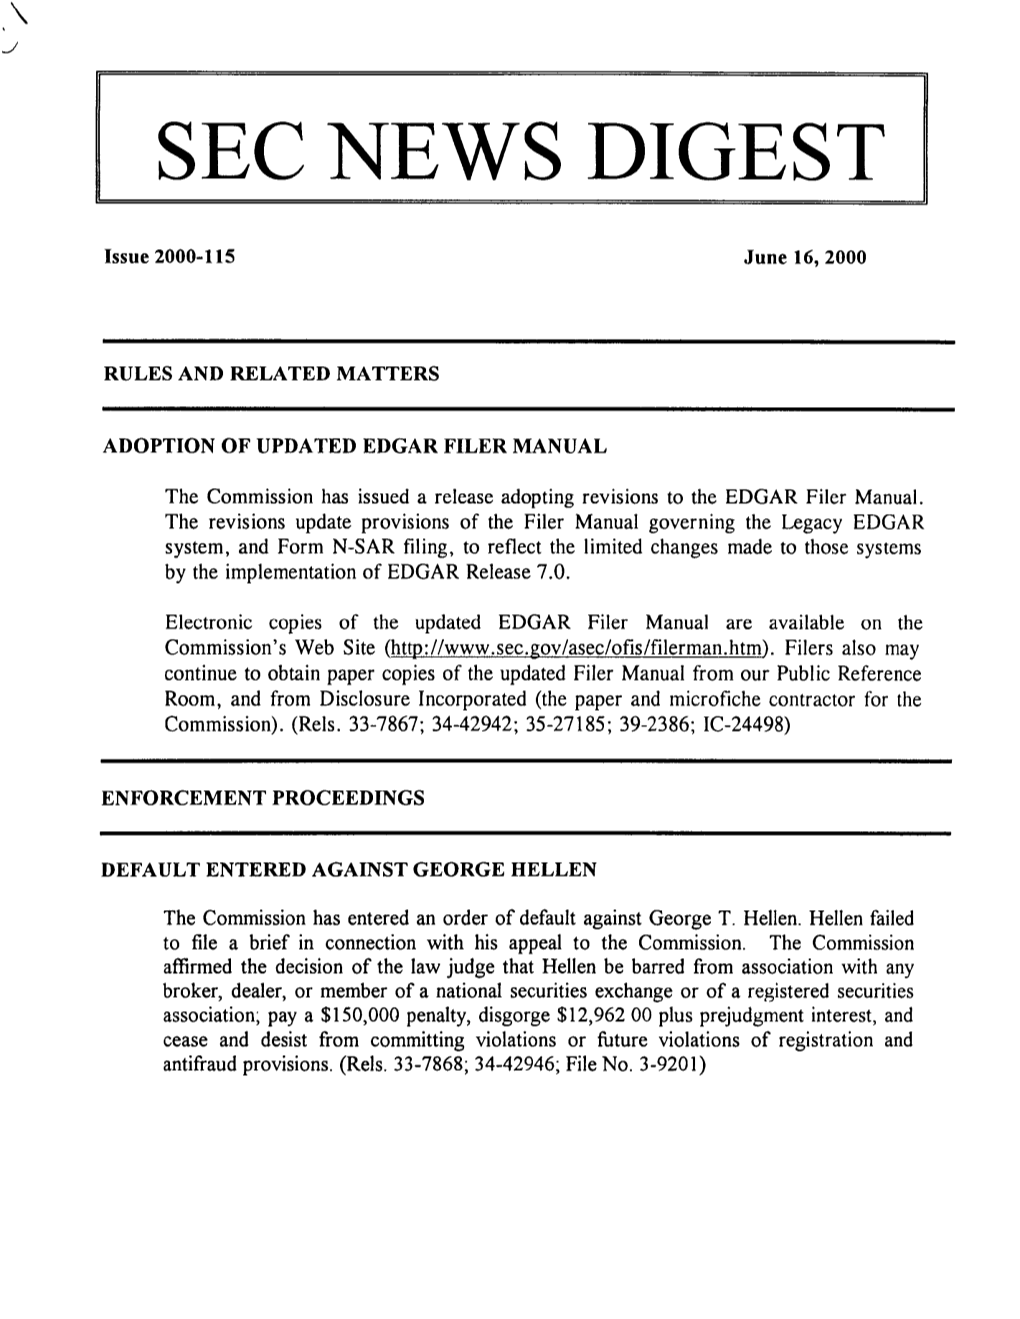 SEC News Digest, 06-16-2000